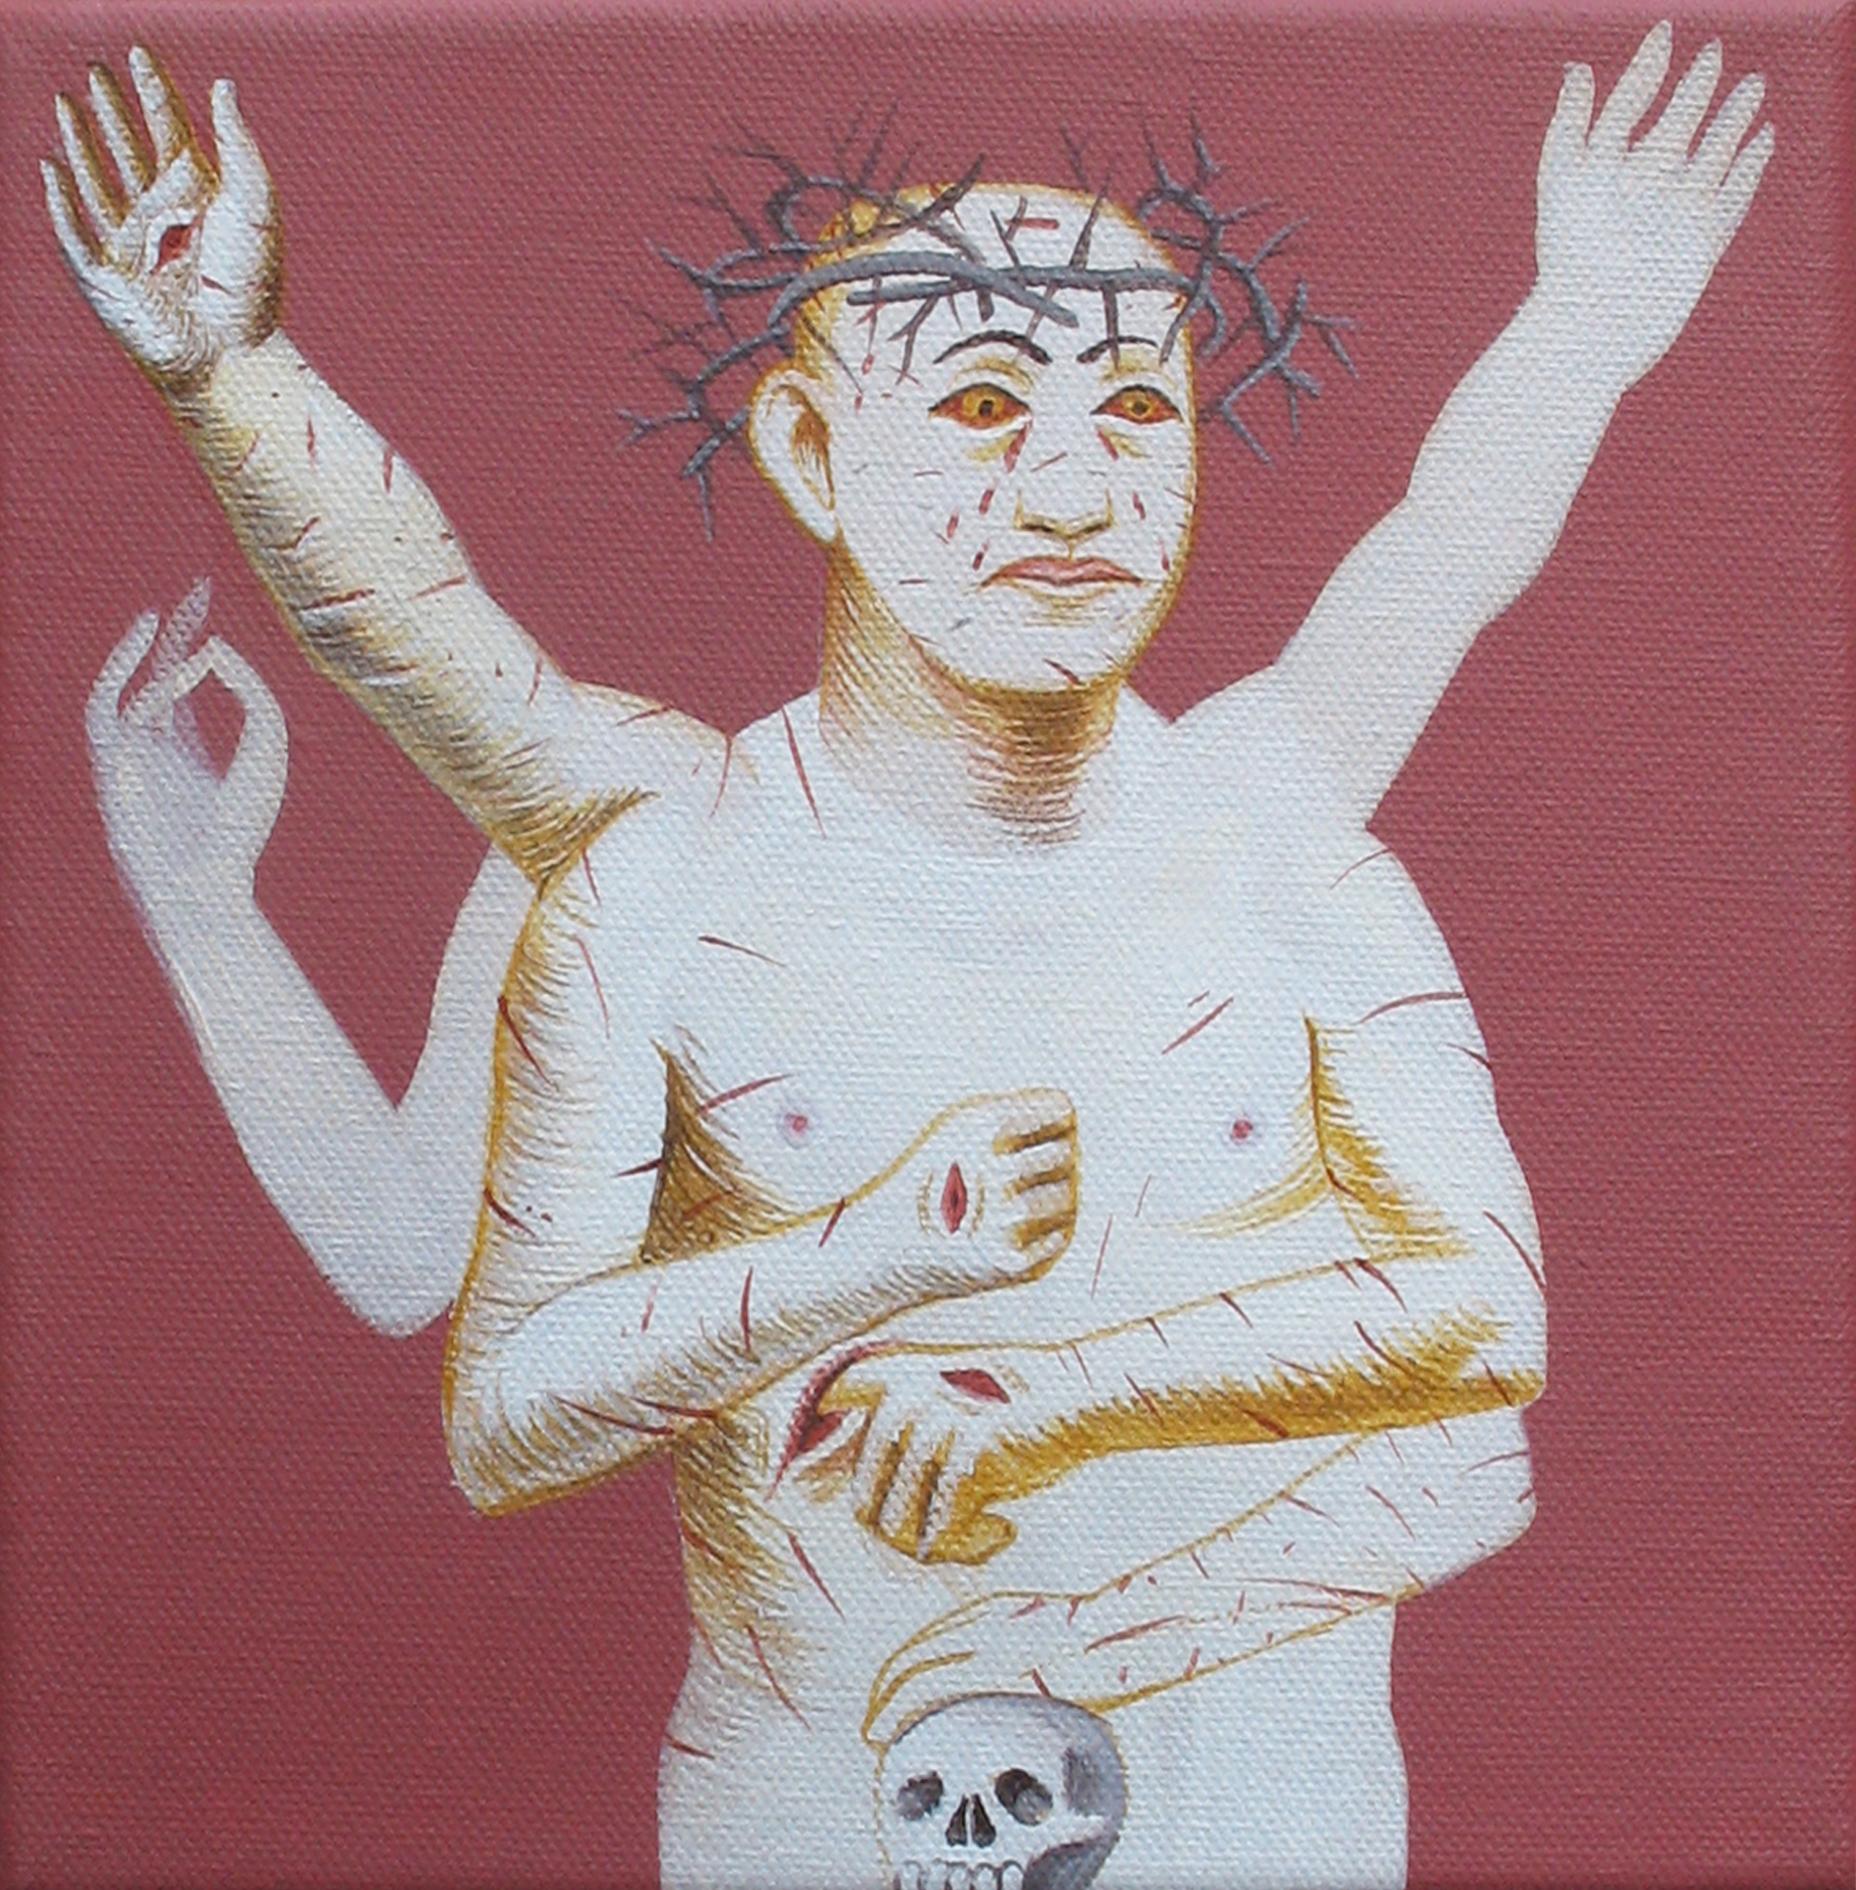 Small Christ 4 - 21st Century, Contemporary Art, Painting, Figurative, Skull